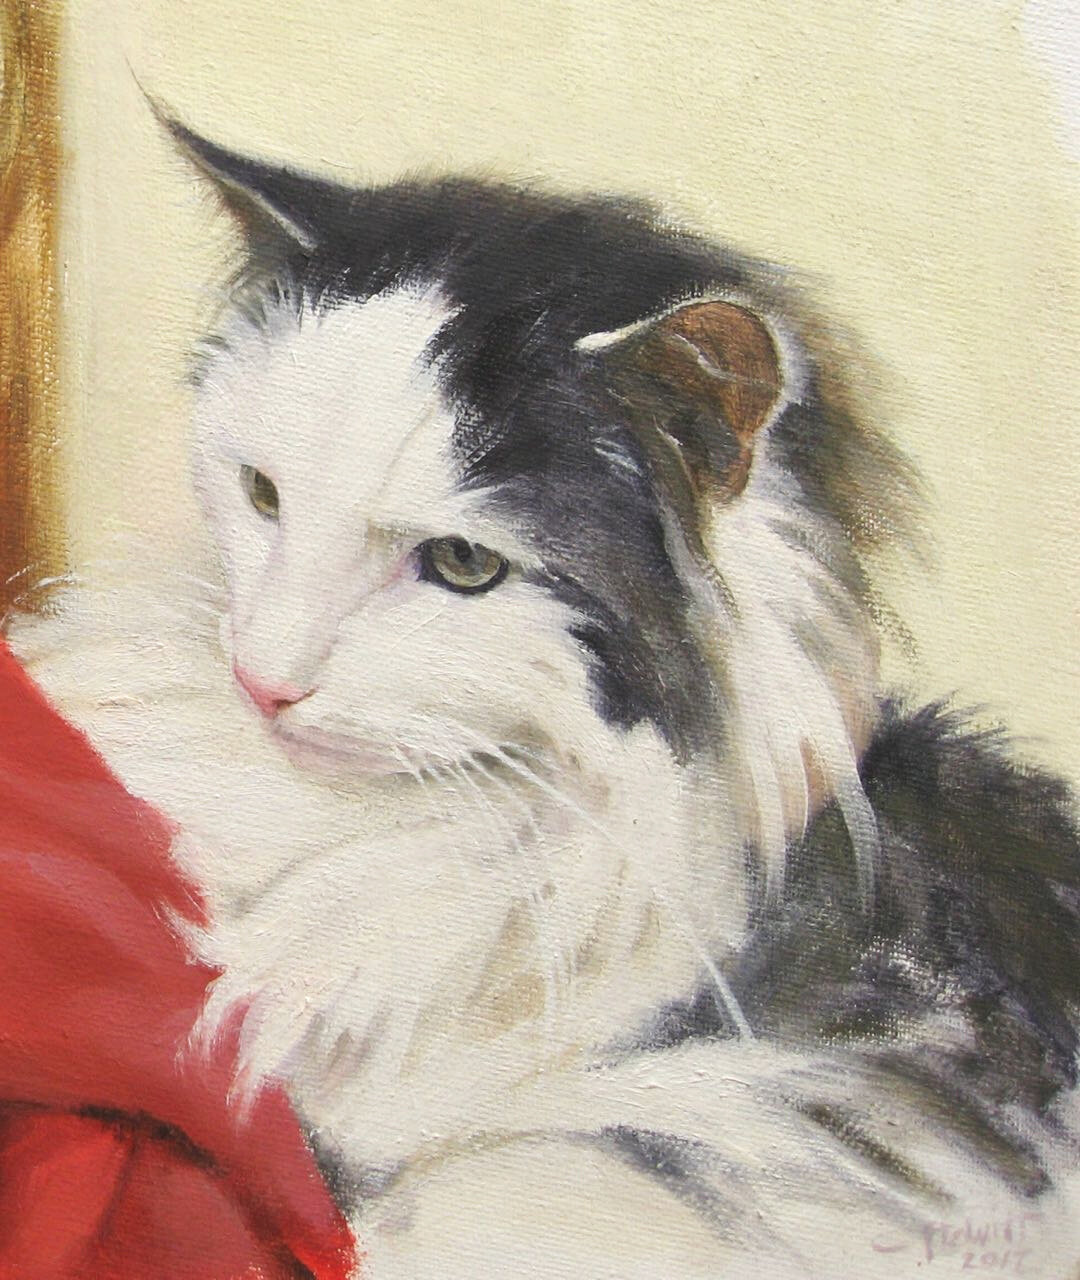  Cat portrait in oil 